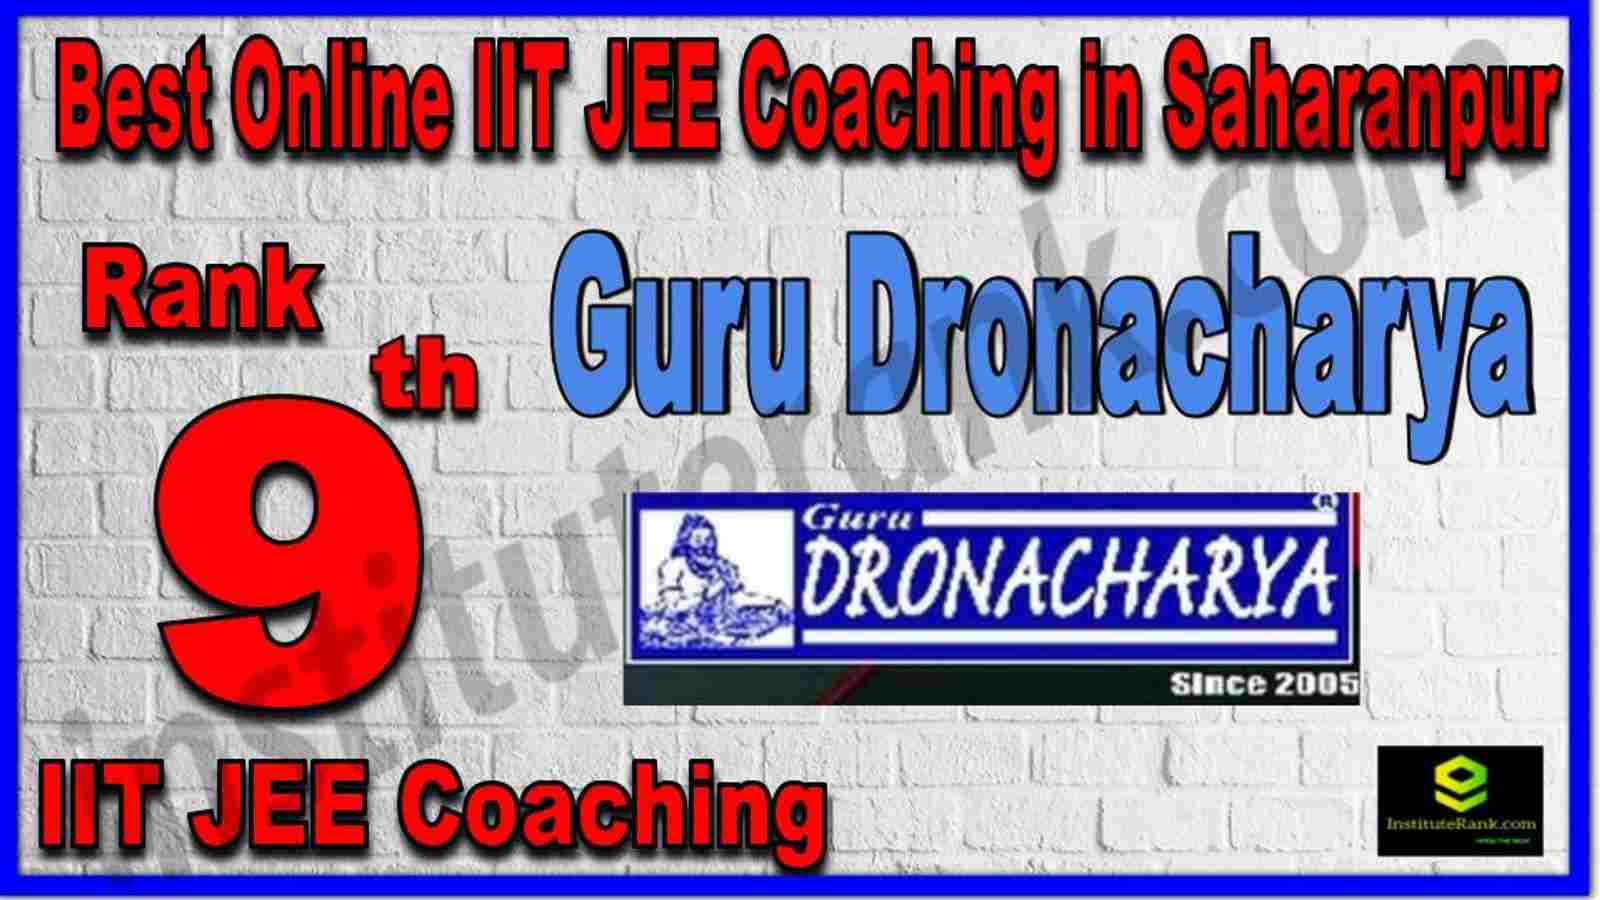 Rank 9th Best Online IIT JEE Coaching in Saharanpur